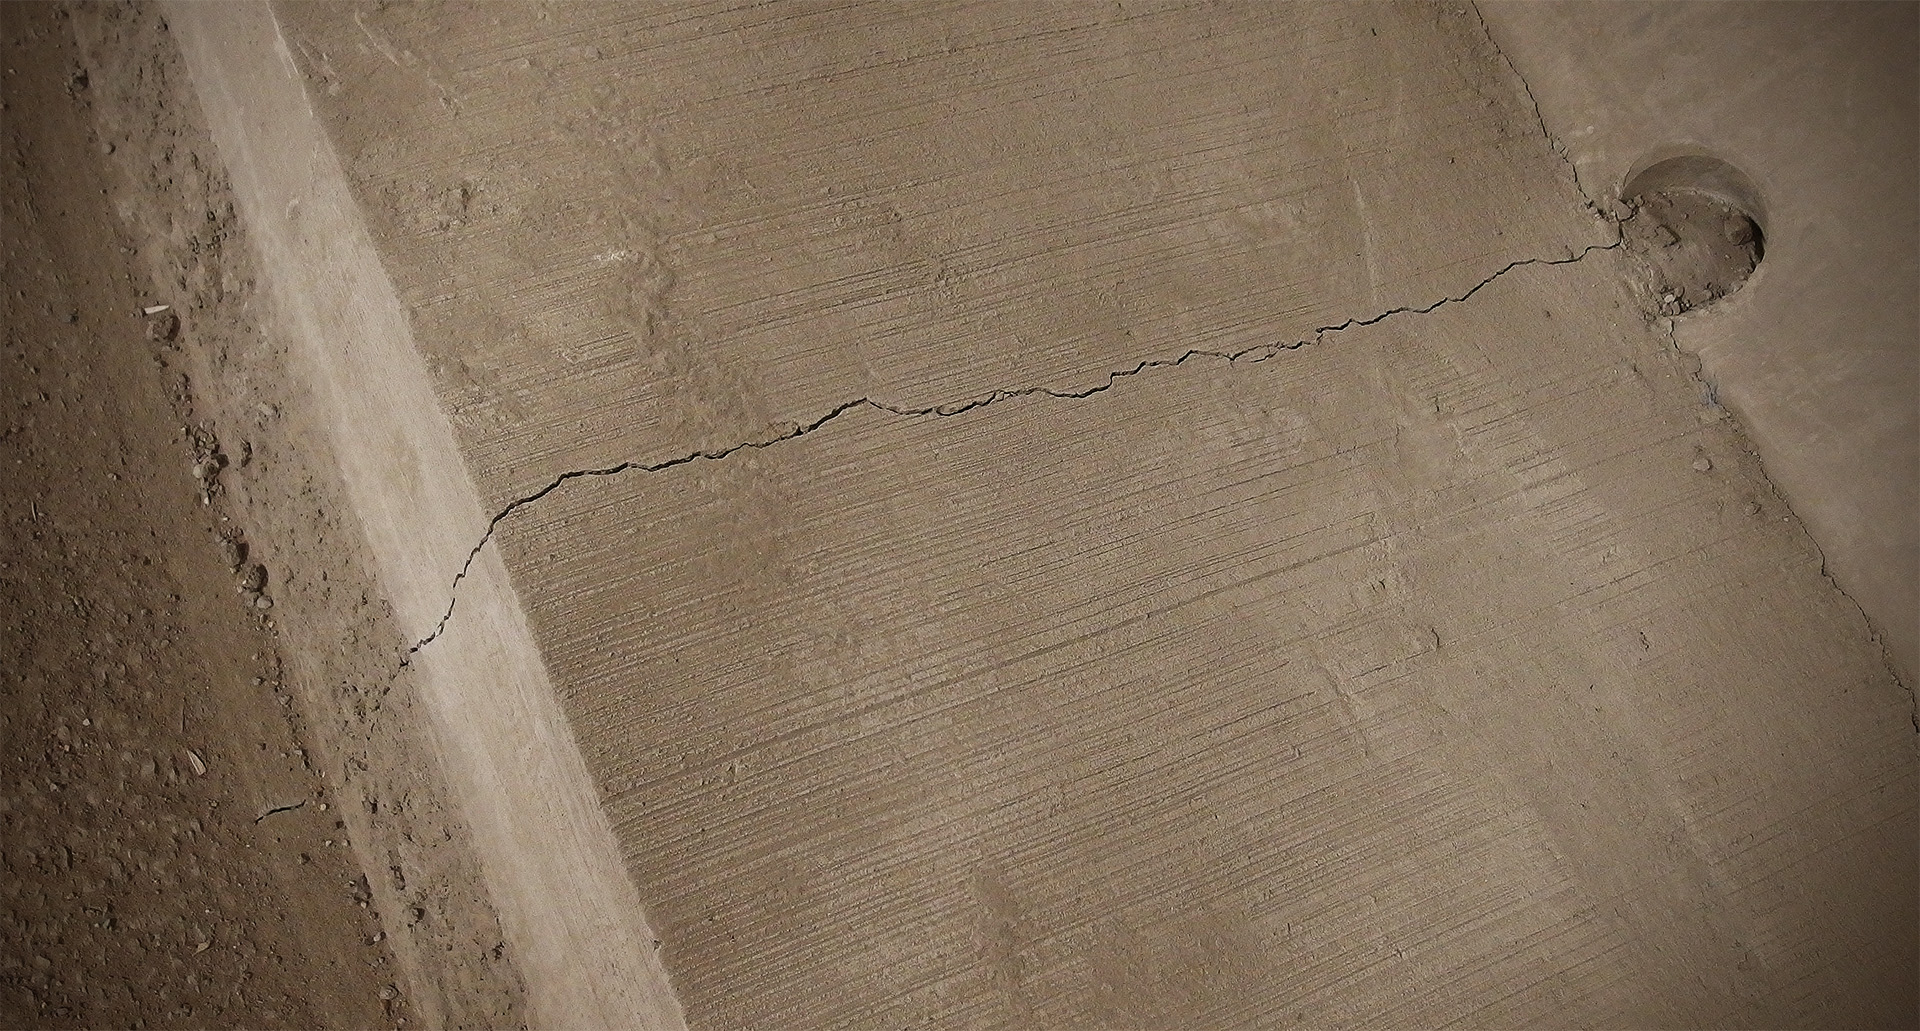 A concrete slab has a thin crack along its width